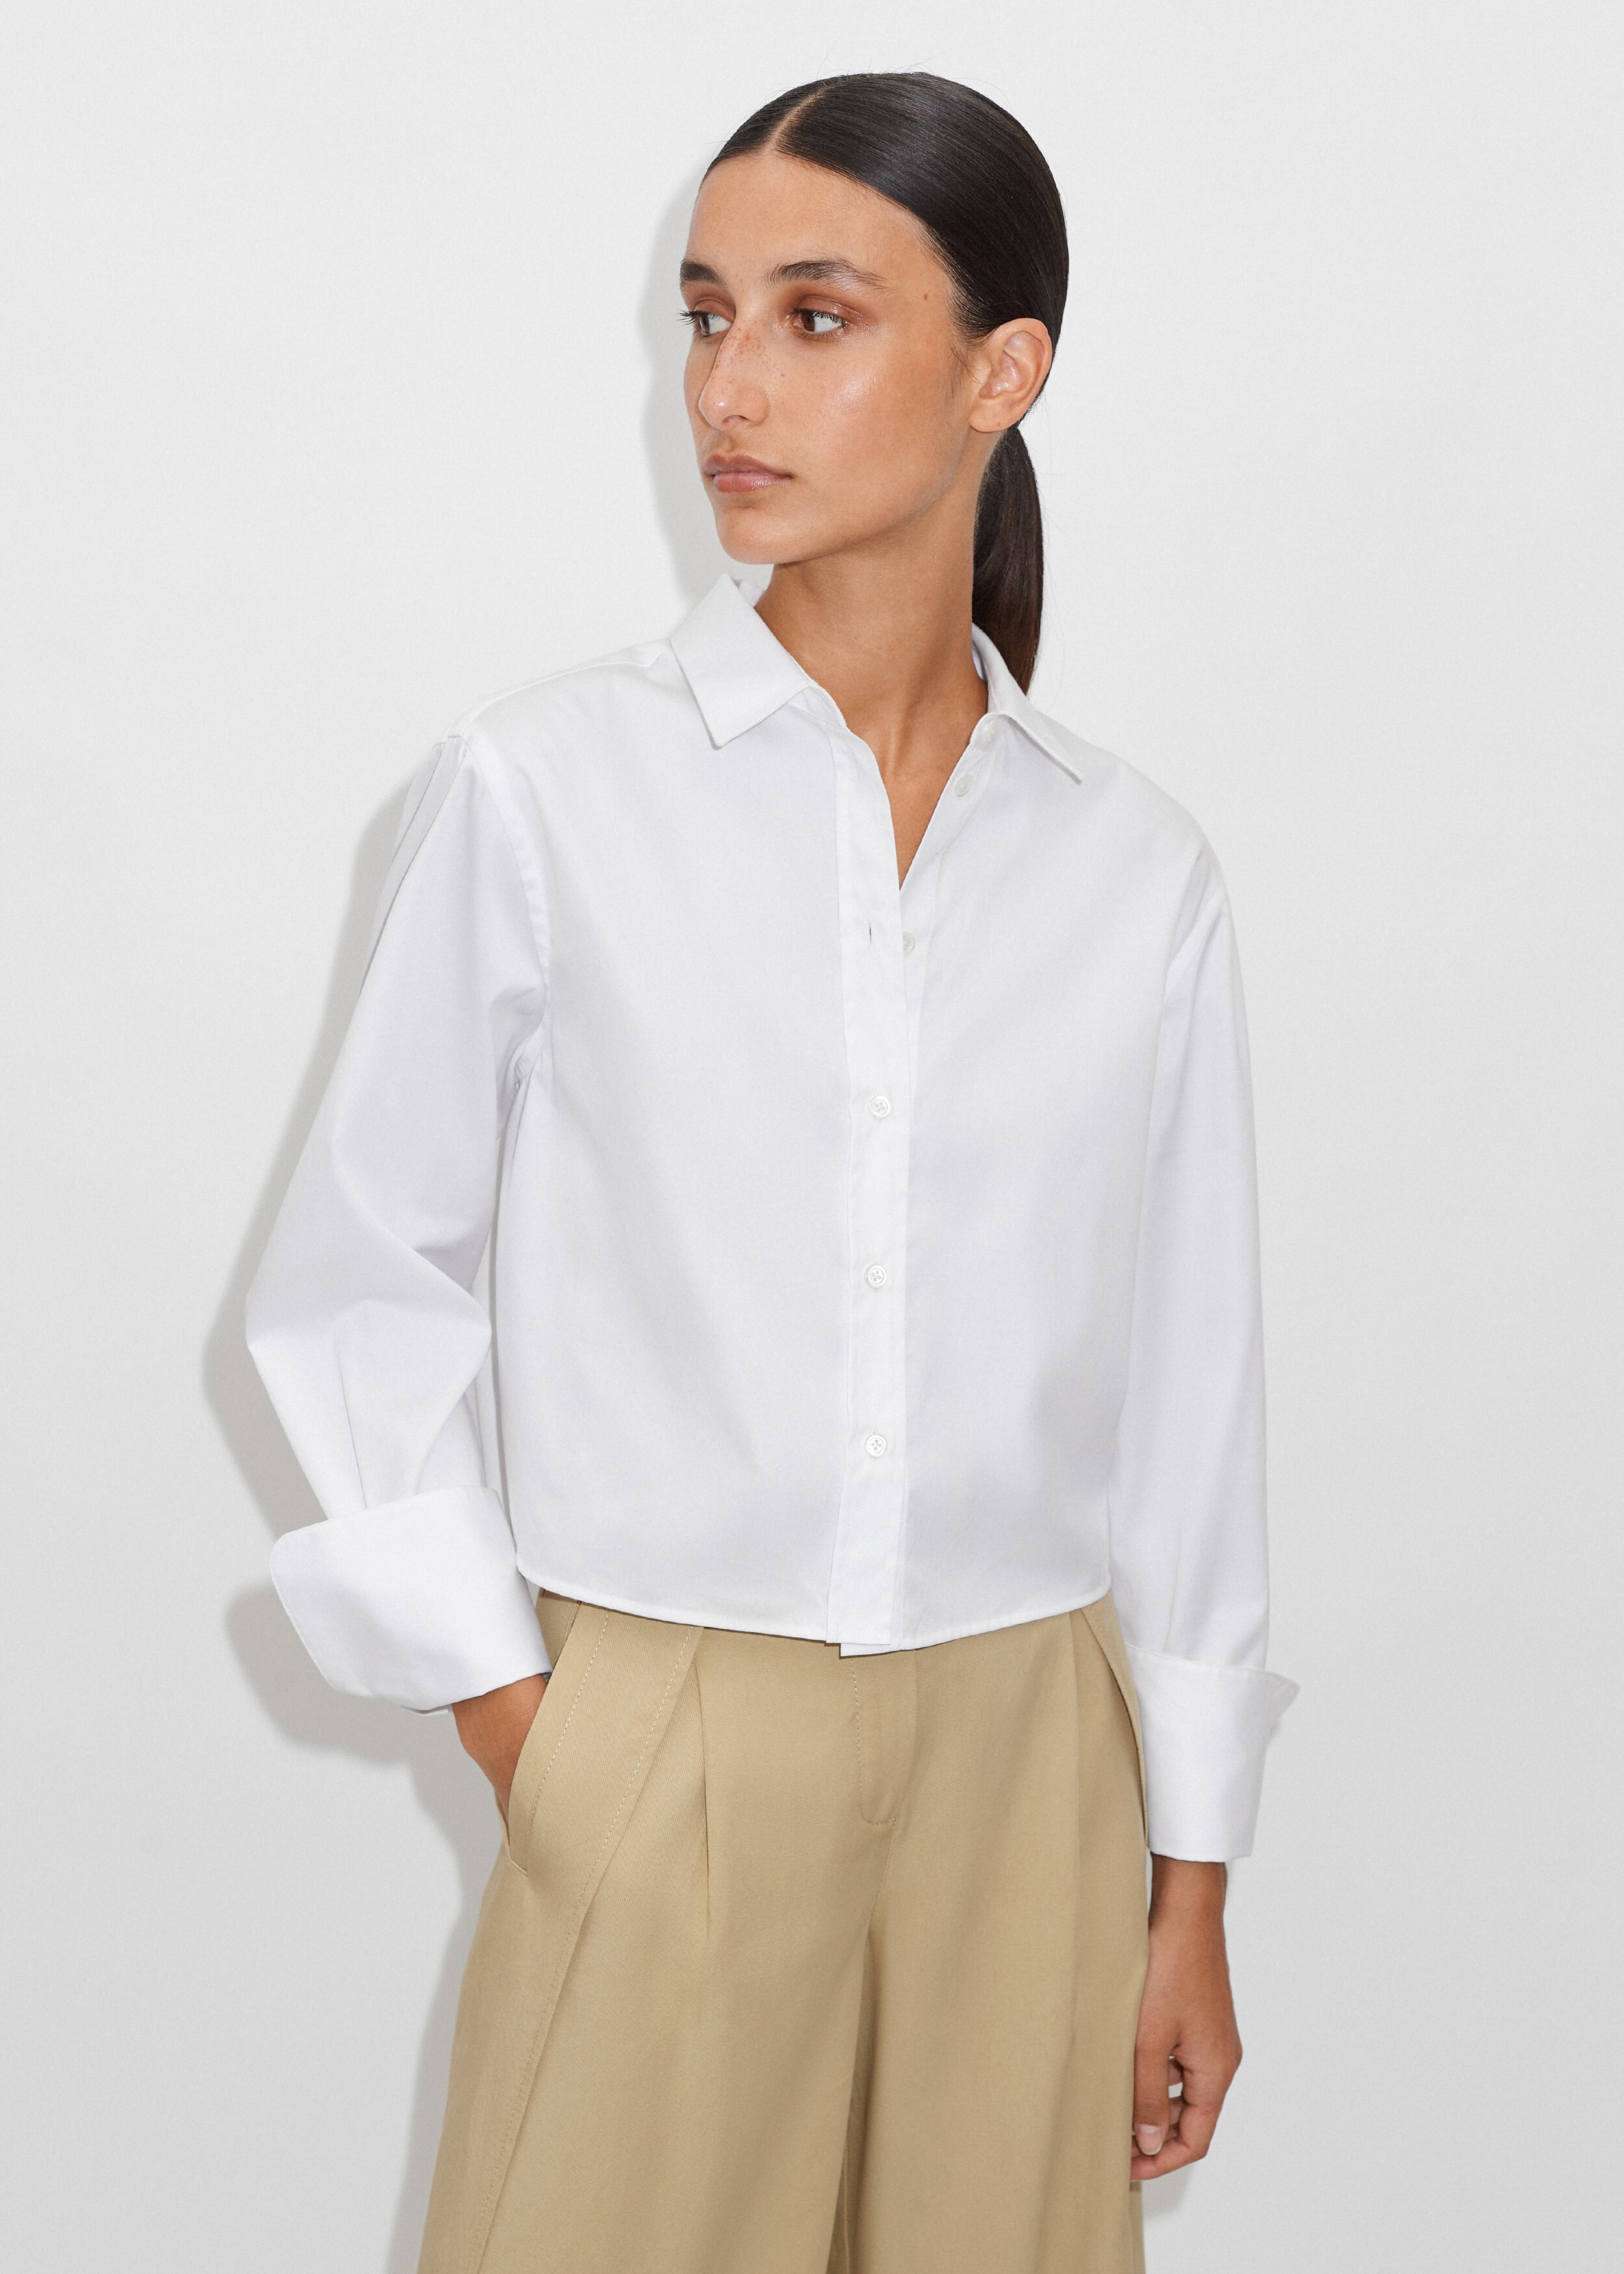 Crease Less Cotton Cropped Shirt Soft White